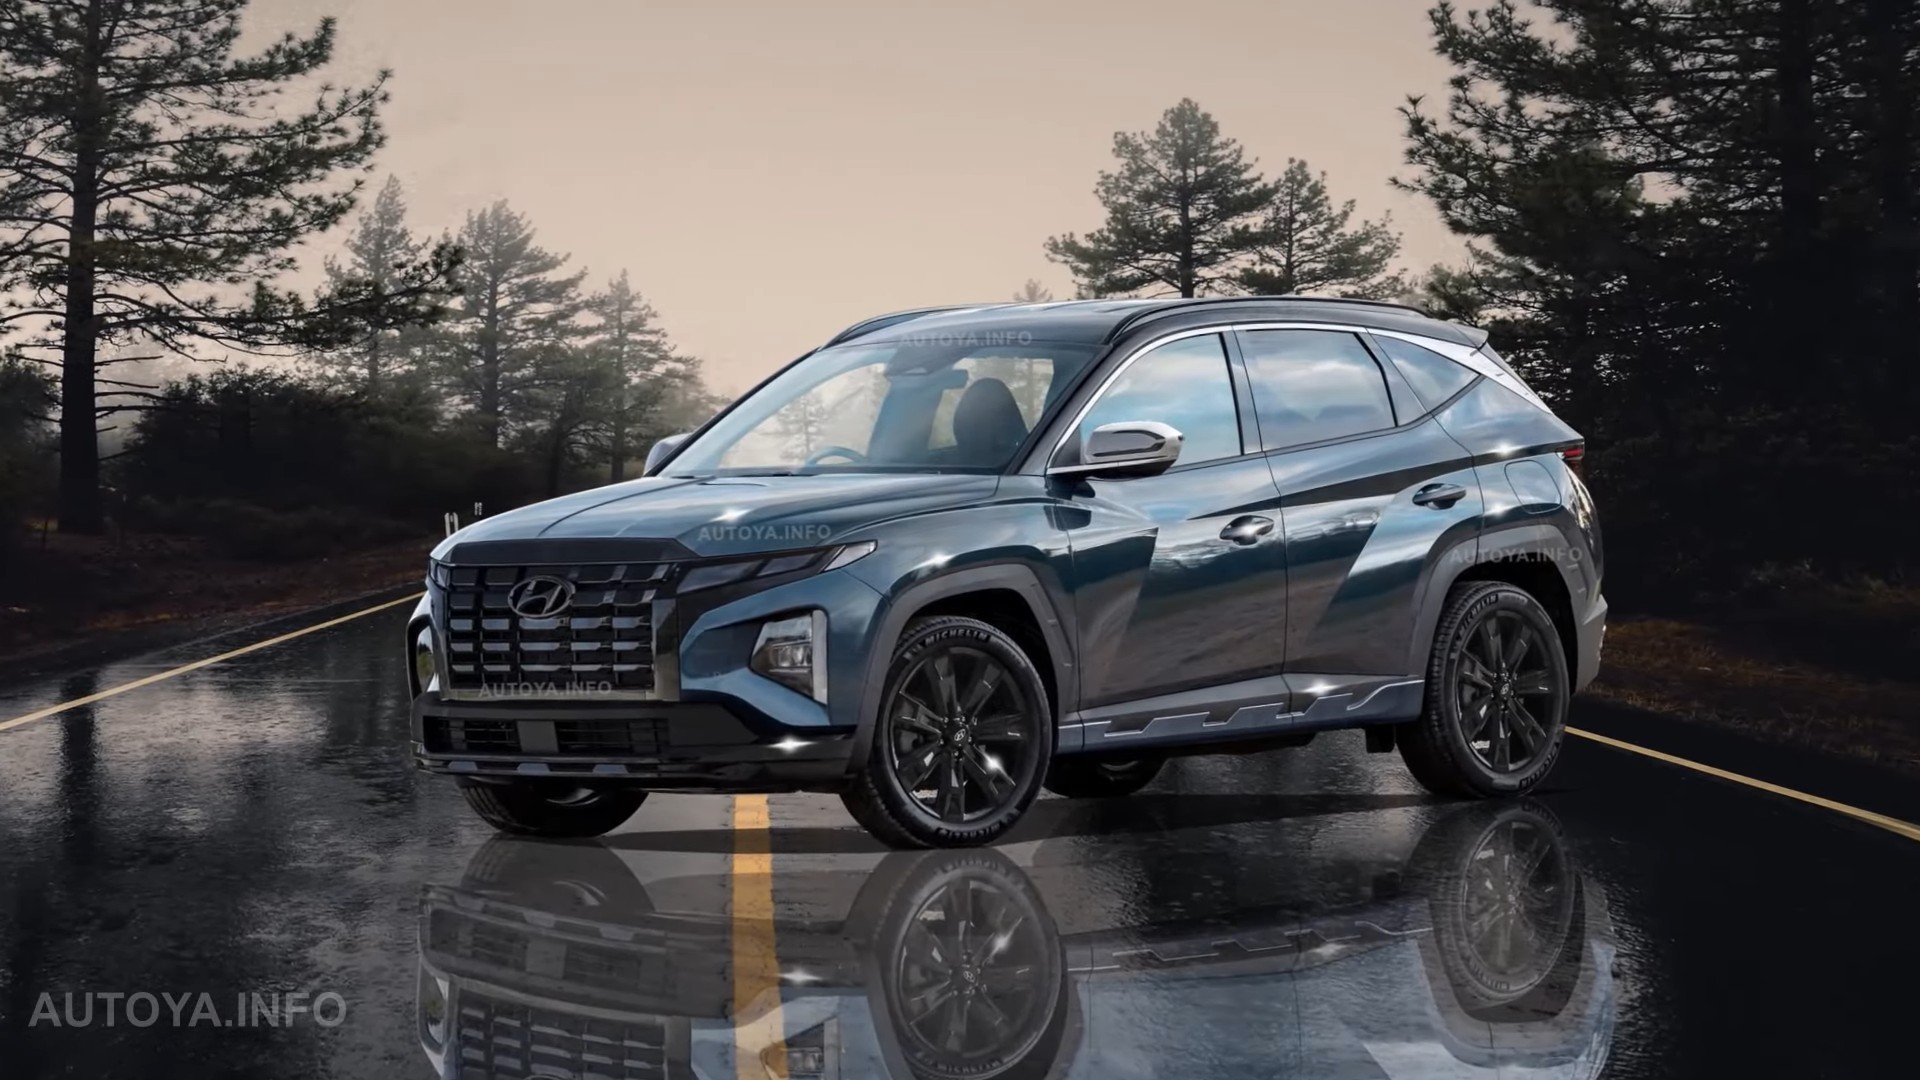 Hyundai Tucson Refresh Digitally Steals Palisade’s DNA, Has Ample Color